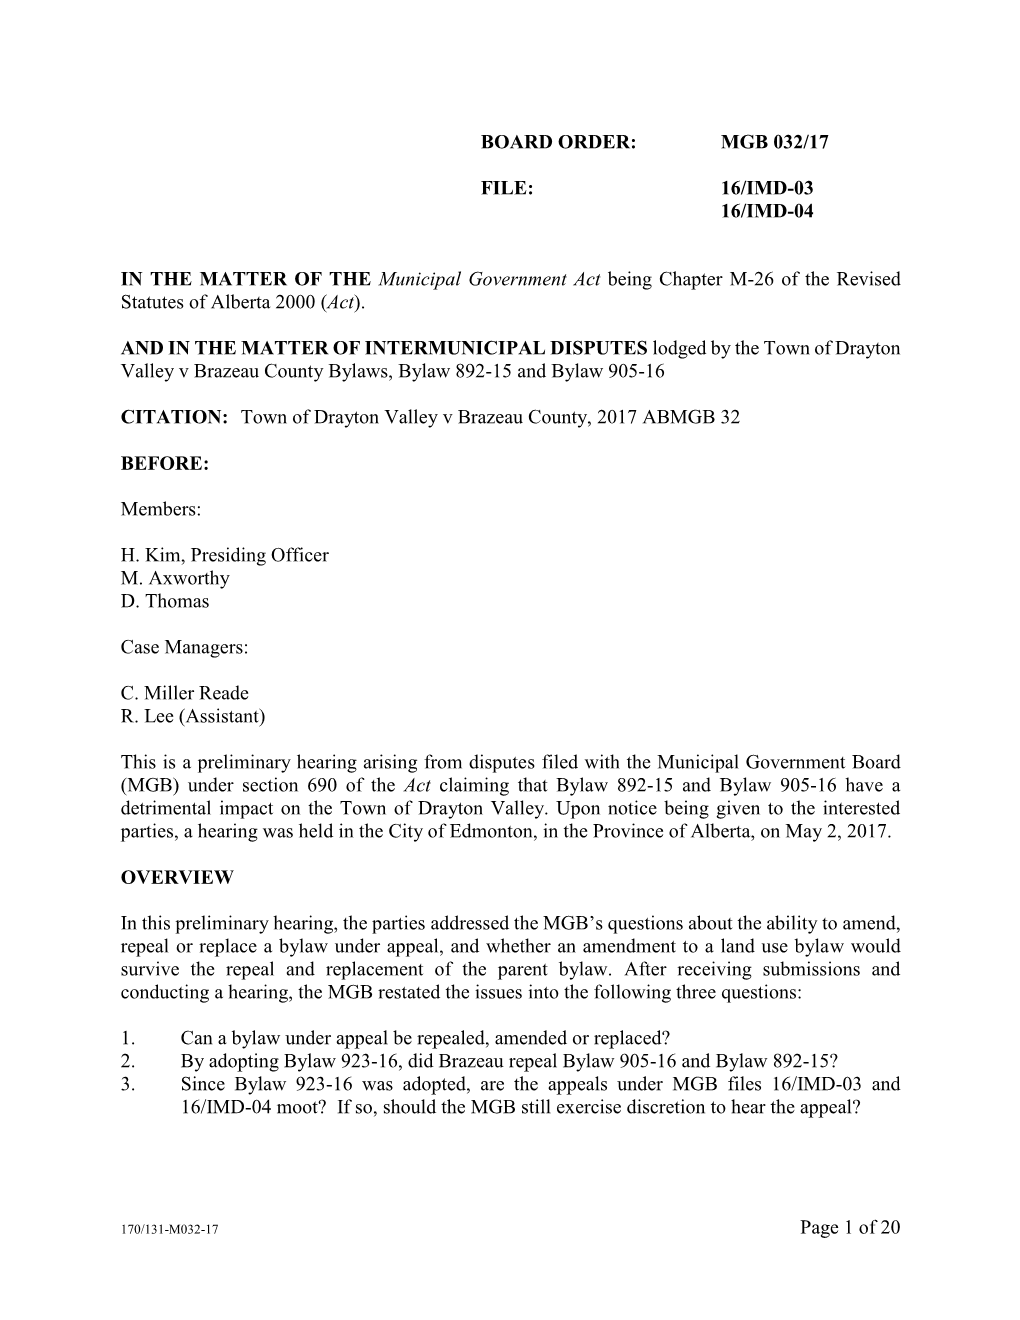 MGB Board Order 032/17 : Town of Drayton Valley V Brazeau County